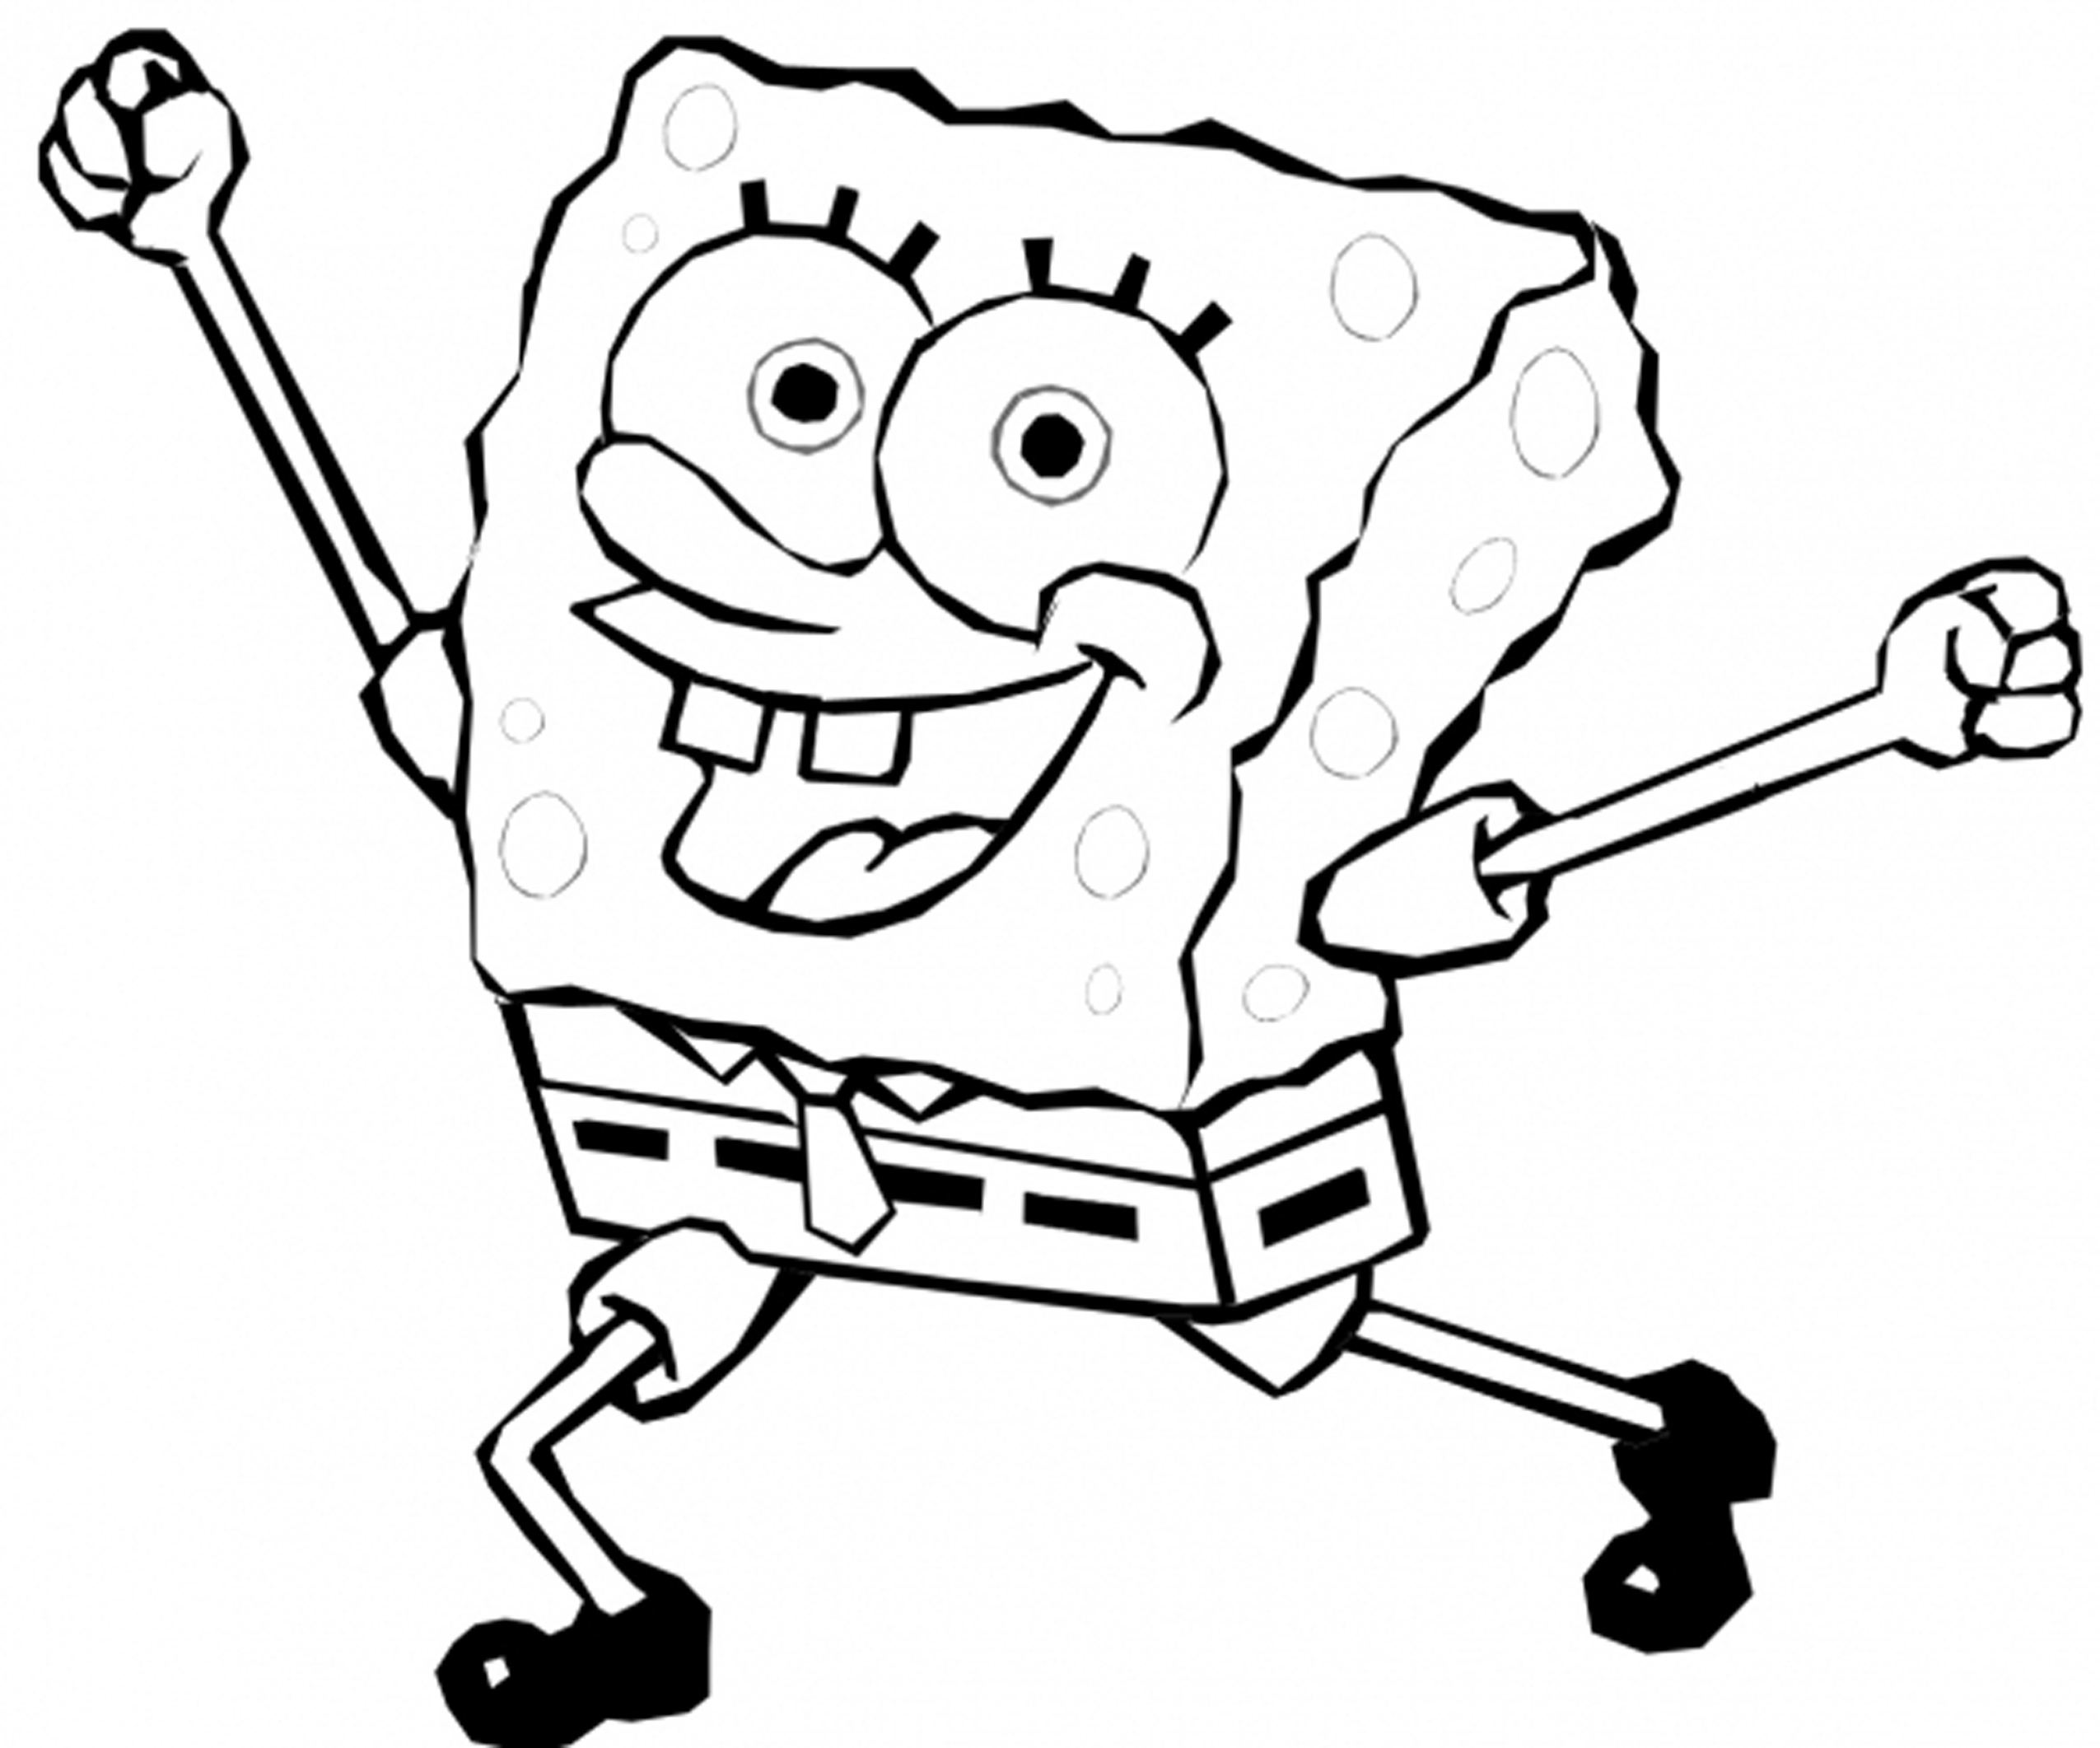 download spongebob squigglepants 3ds for free